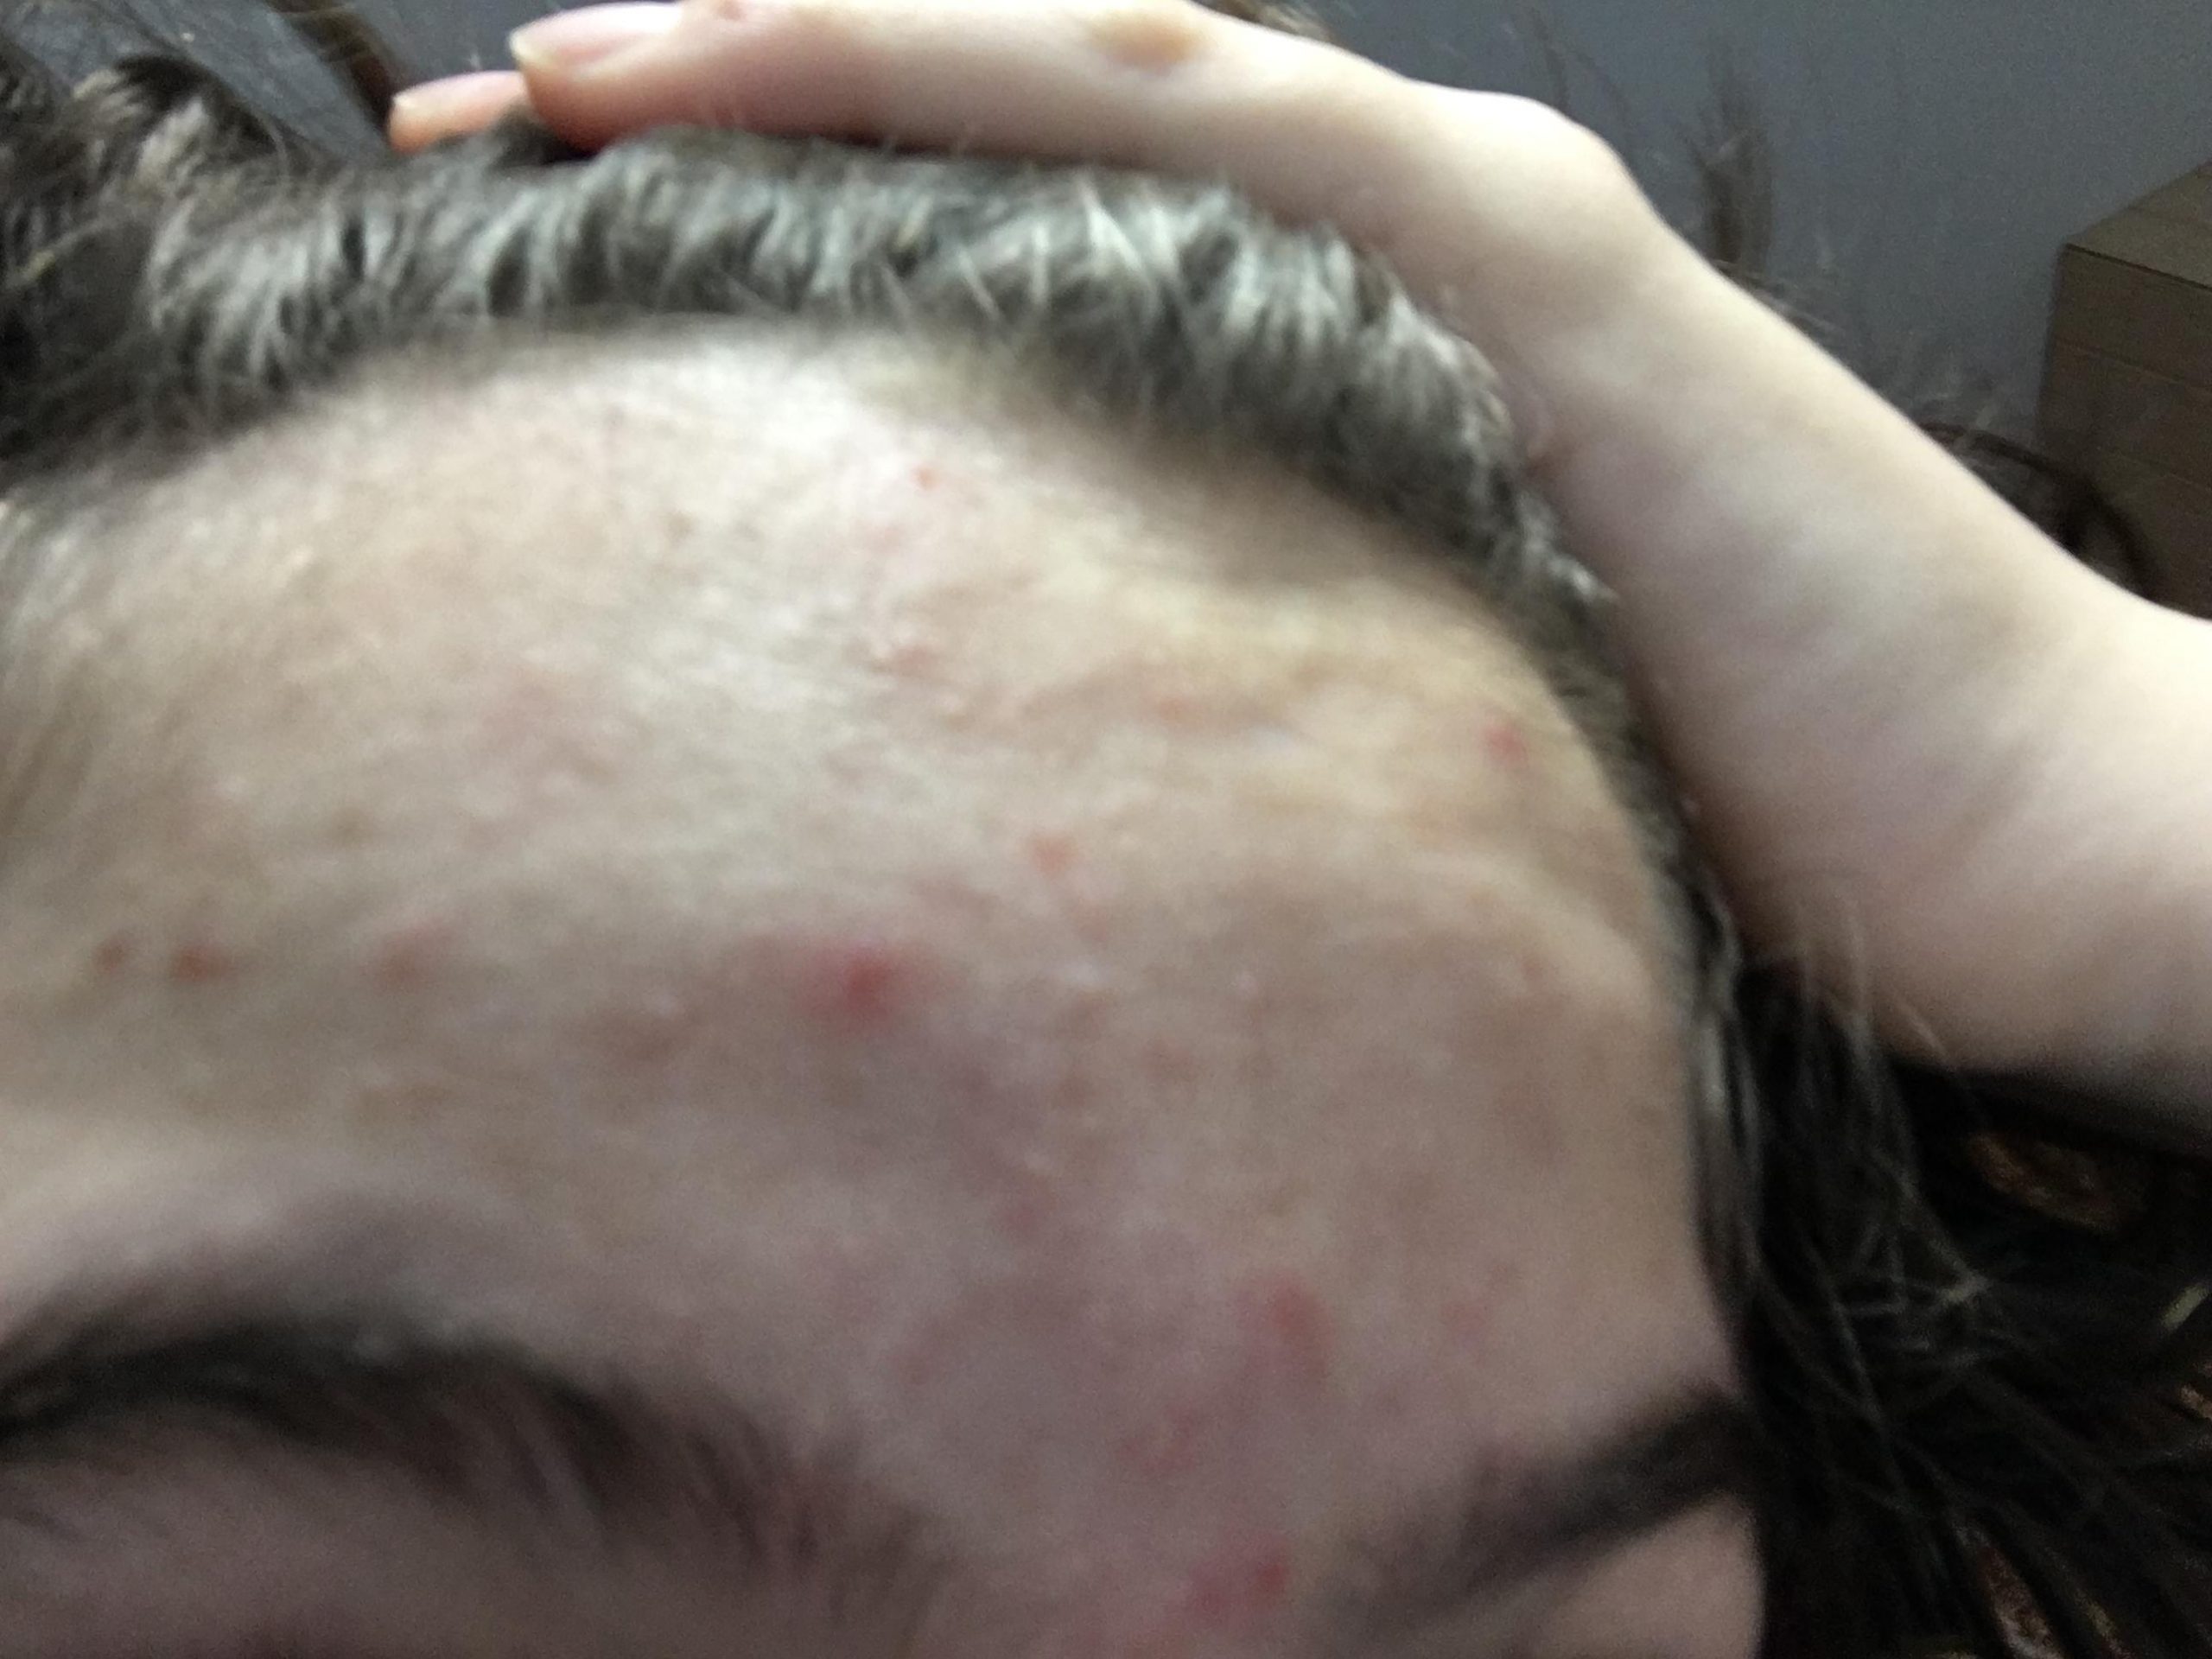 will my acne go away?